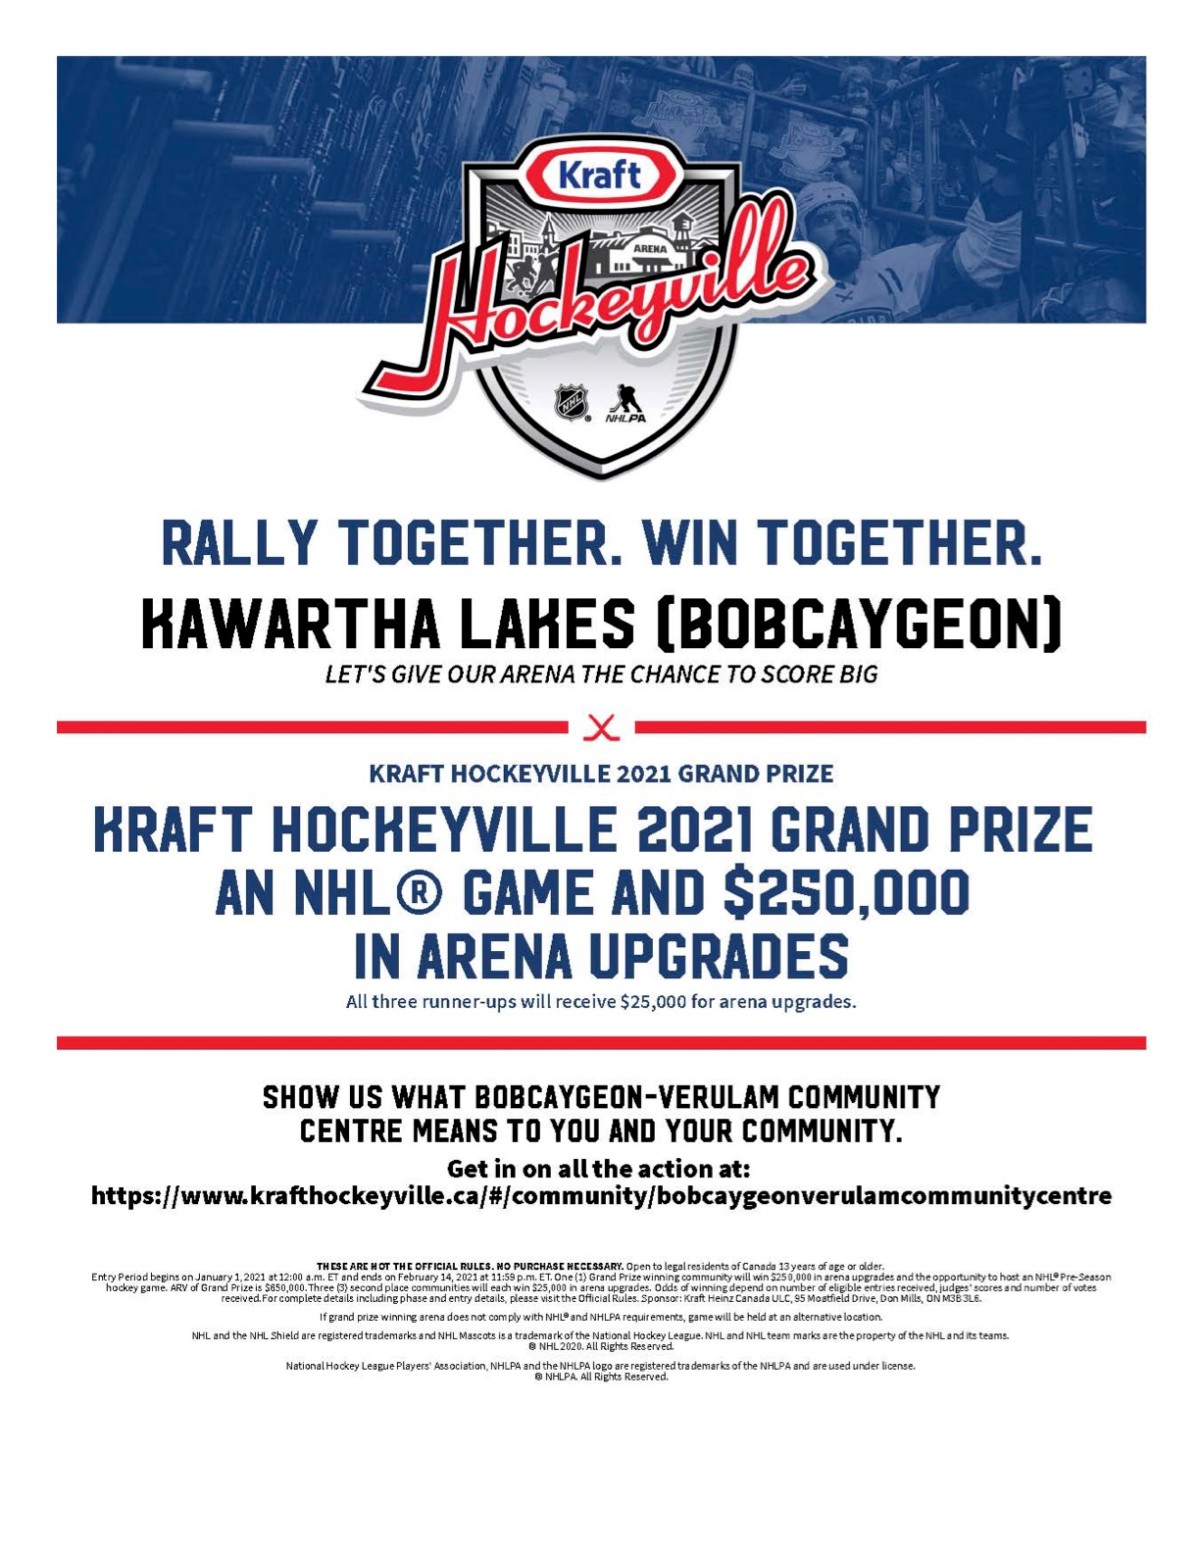 FLYER_Kraft_Hockeyville_2021_for_the_Bobcaygeon_Verulam_Community_Centre_and_Arena.jpg